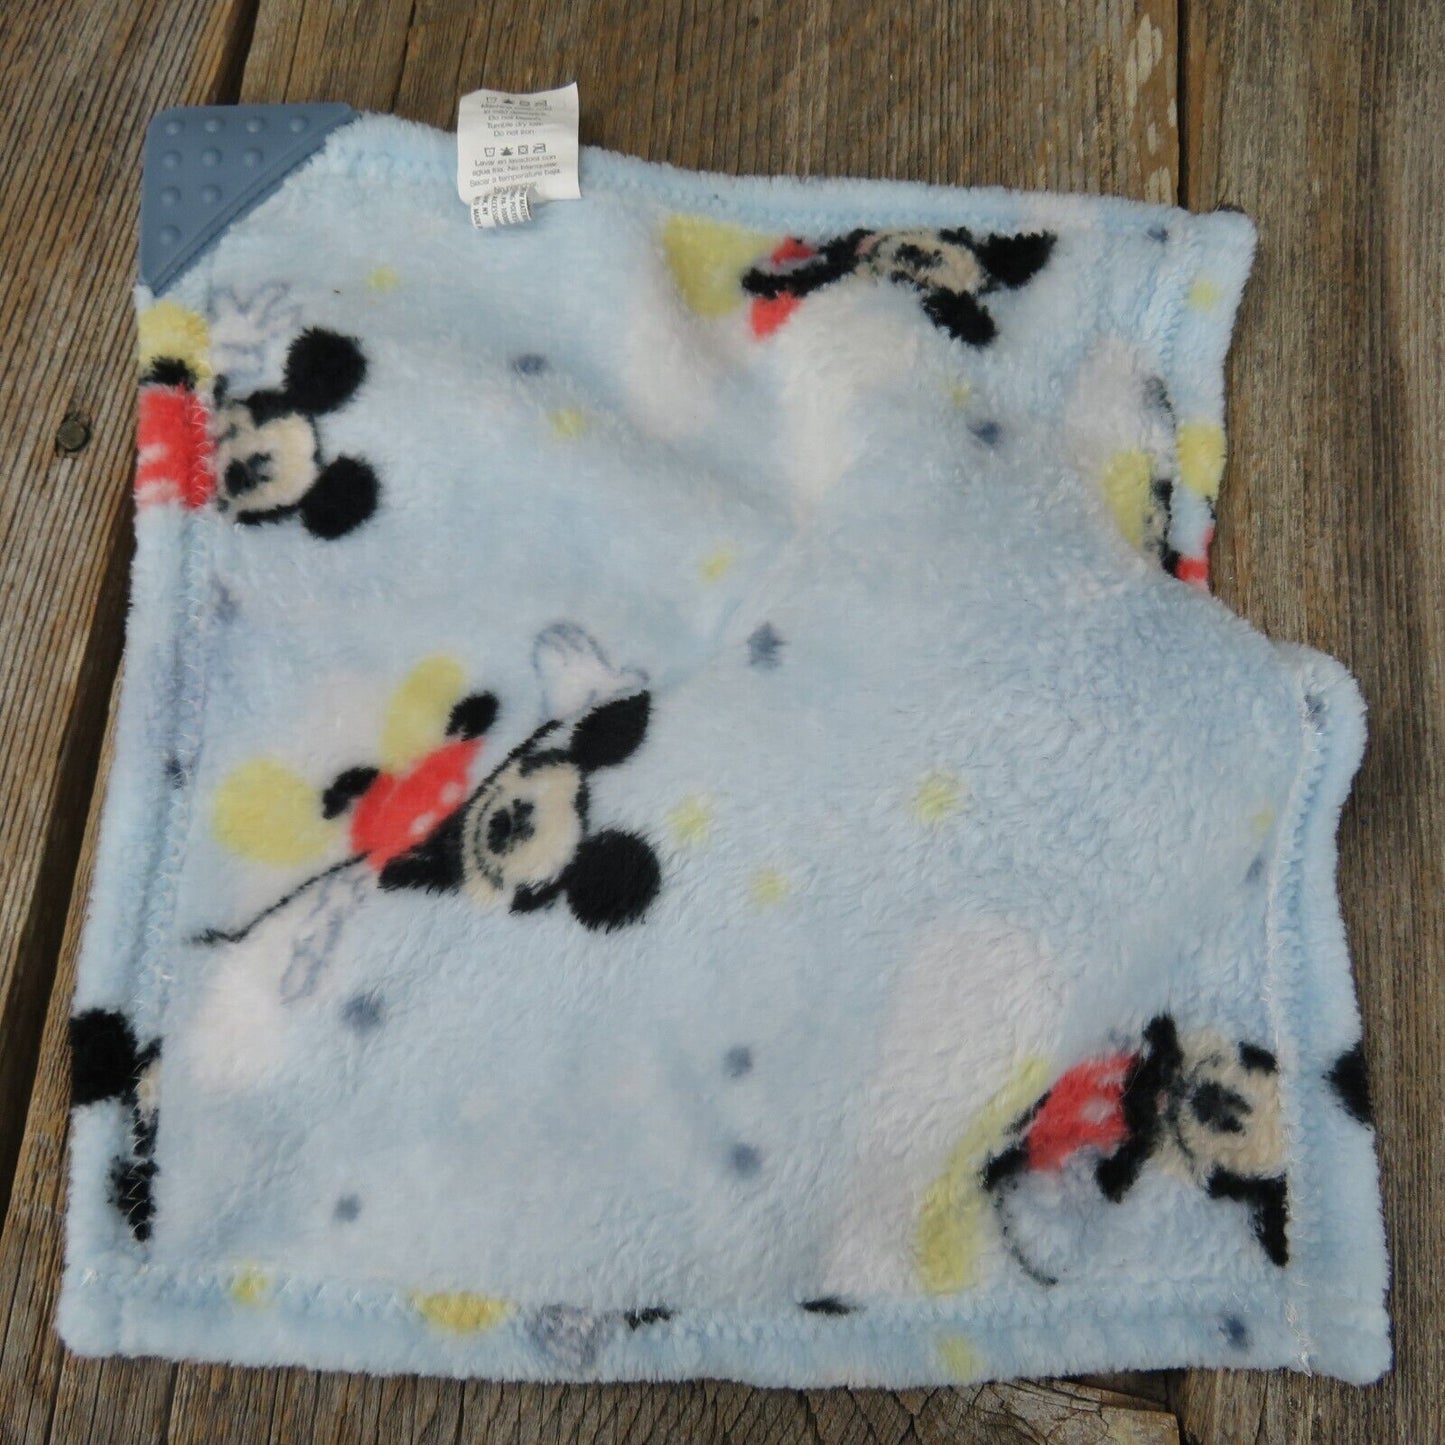 Disney Baby Mickey Mouse Plush Blue Fleece Security Blanket Lovey Lovie Stuffed